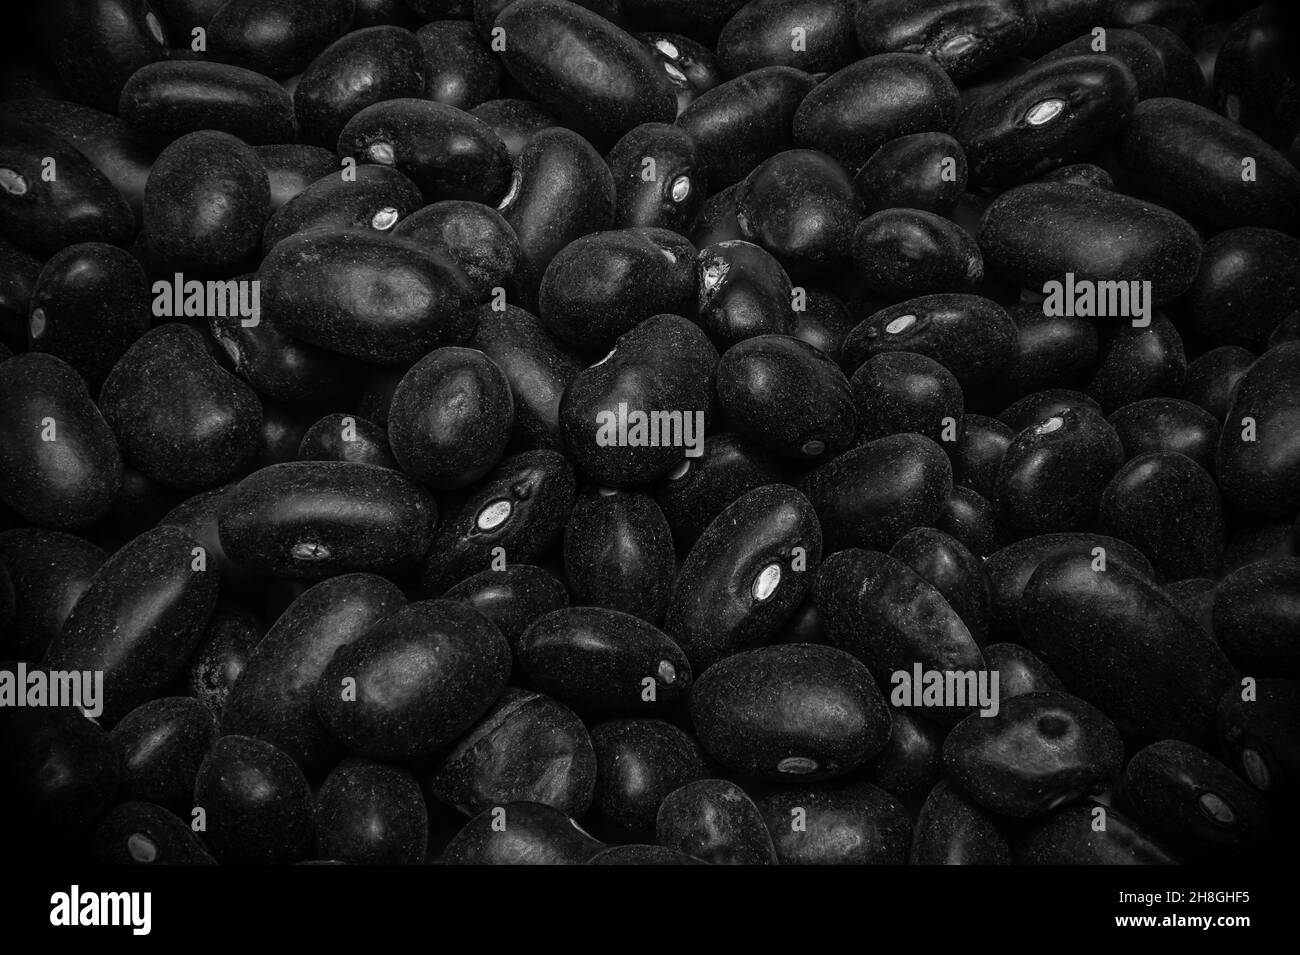 Black beans close-up Stock Photo